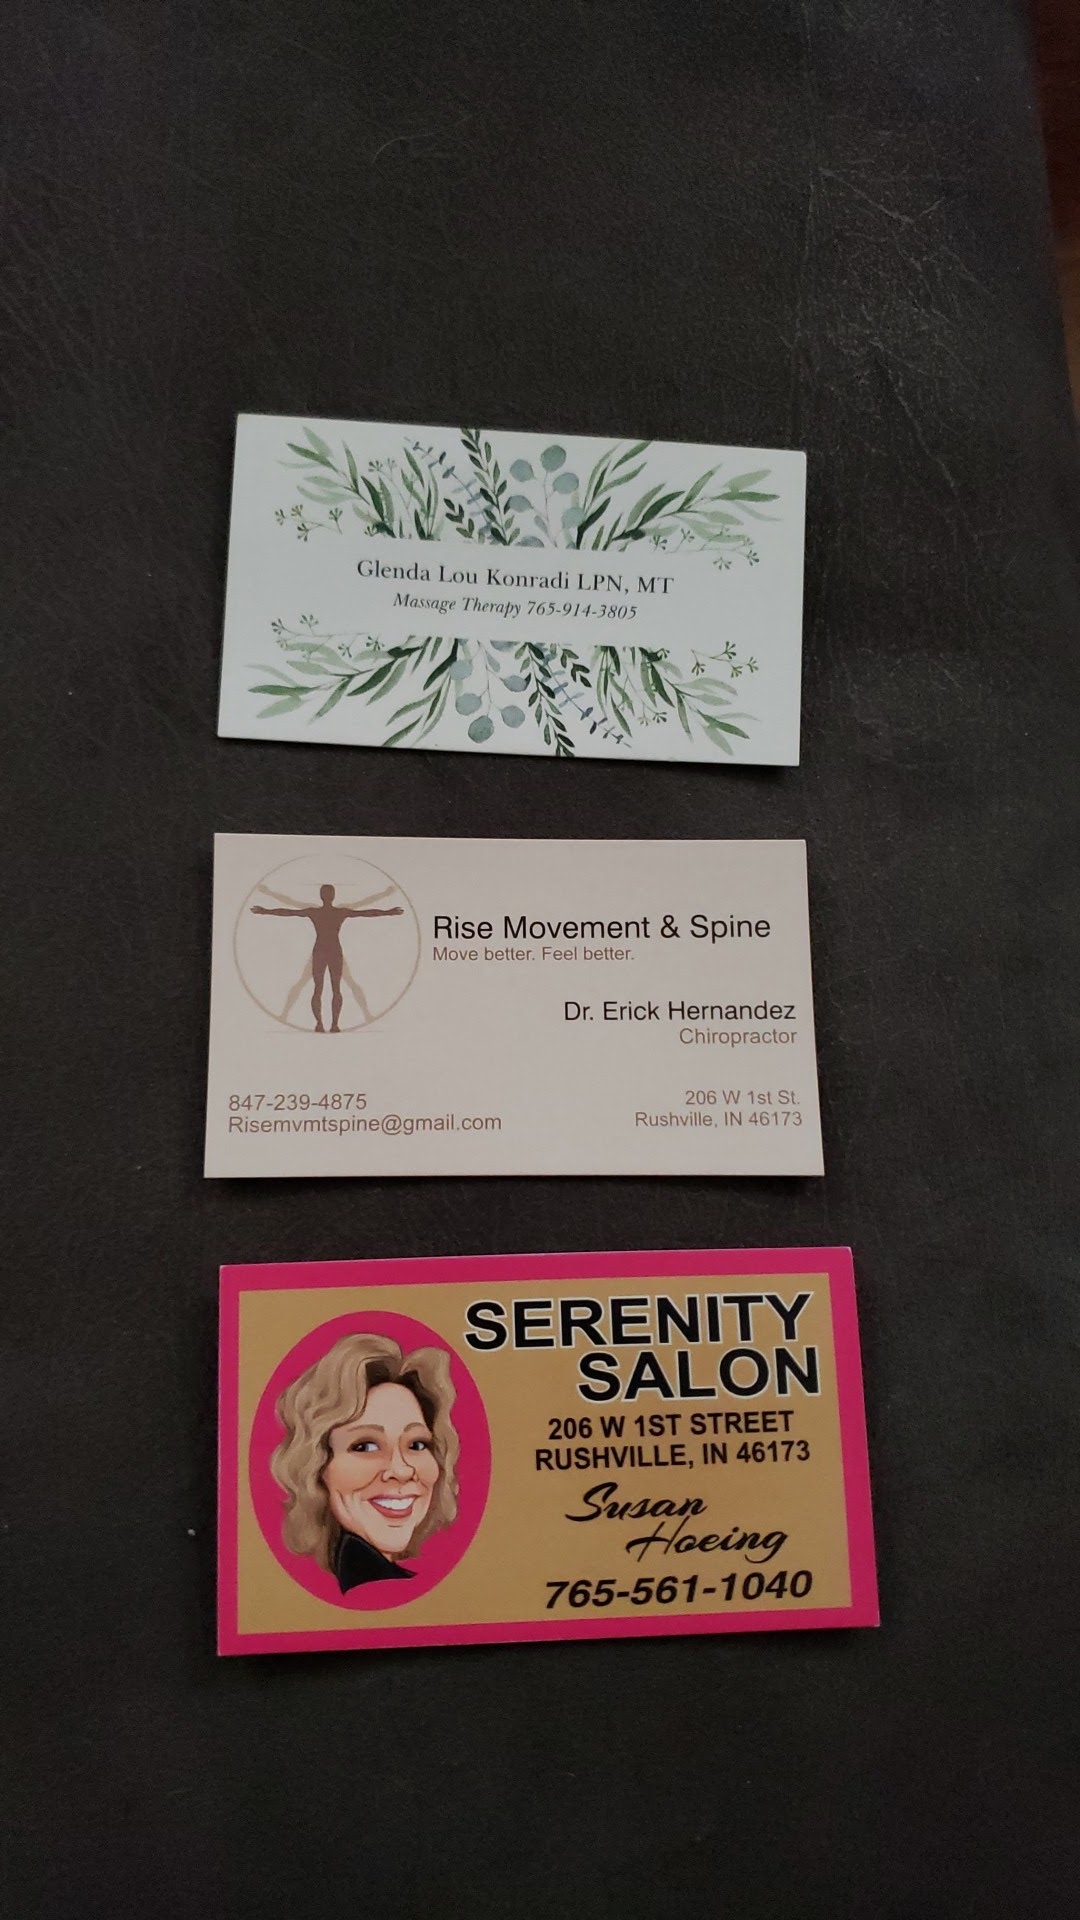 Serenity Salon 201 W 1st St, Rushville Indiana 46173